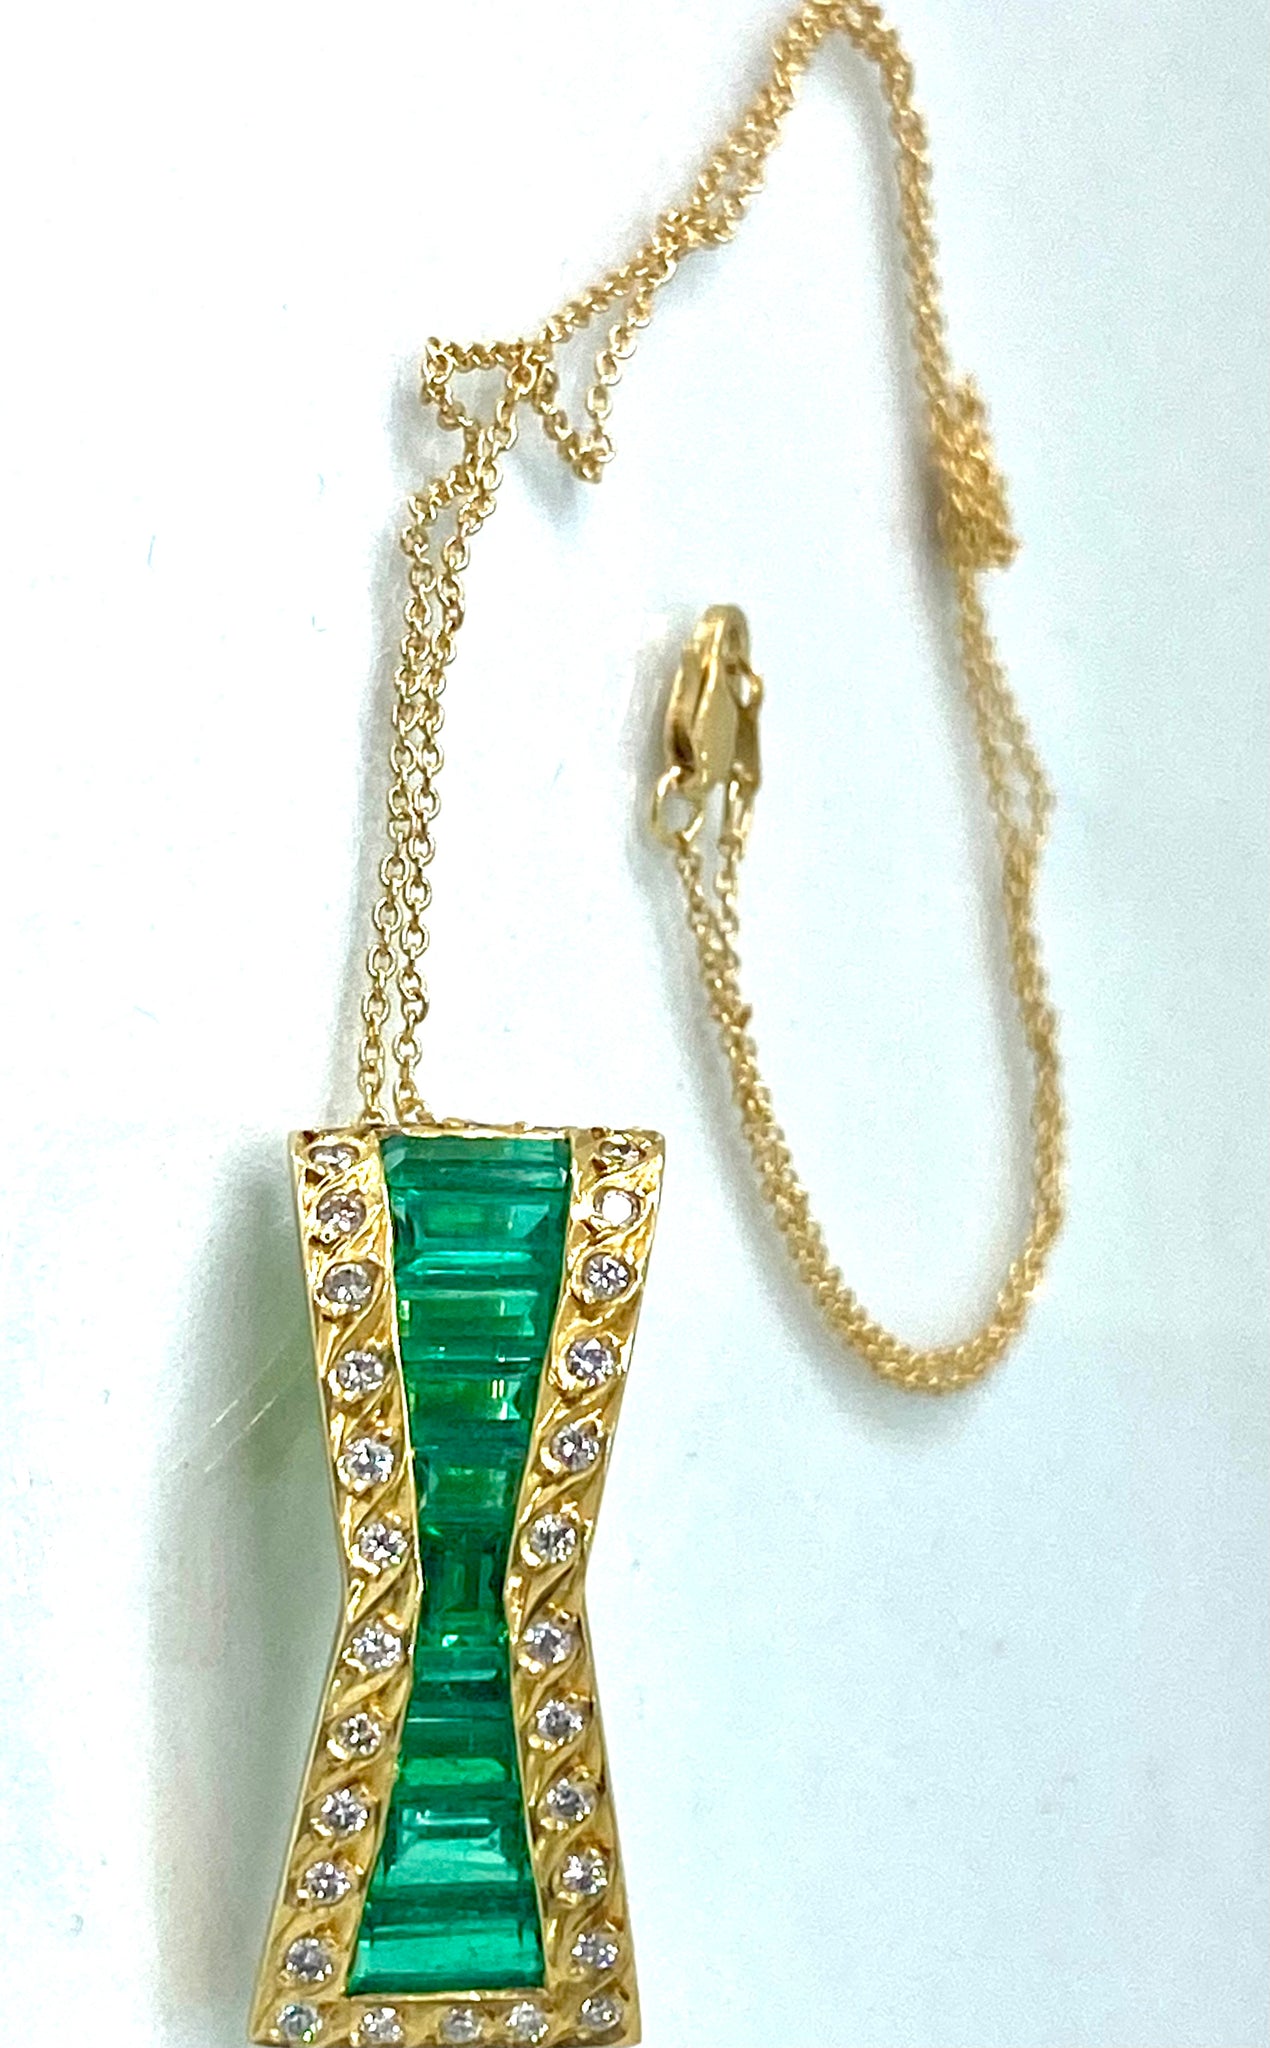 GIA 4.00 Carat Fine Muzo Colombian Emerald Pendant 18K Gold